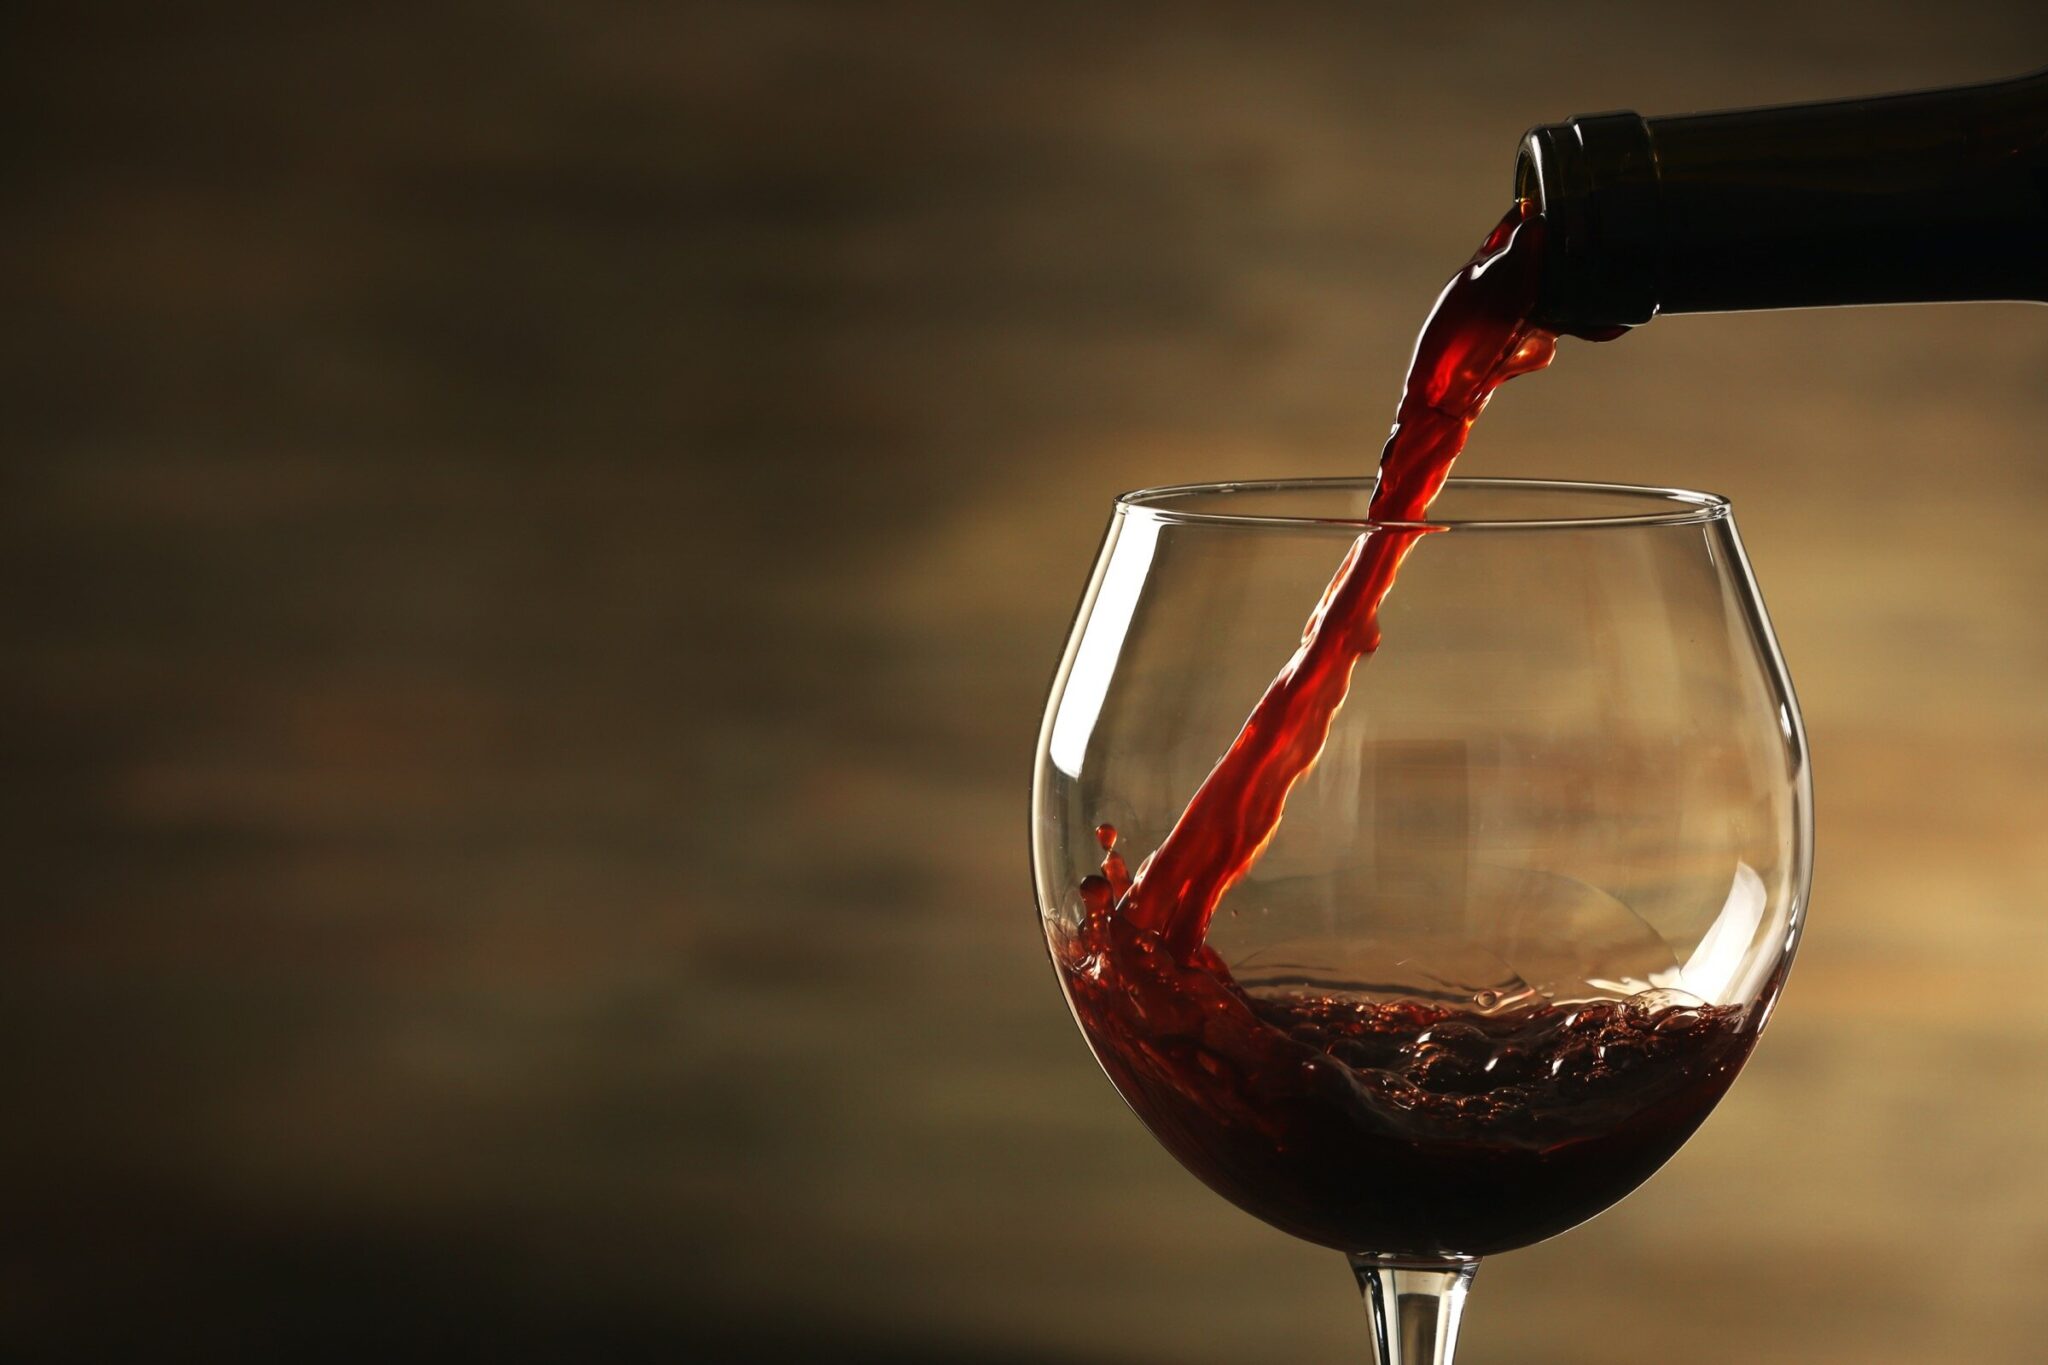 Картинку вине. Бокал с вином. Бокал красного вина. Красное вино в бокале. Вино наливают в бокал.